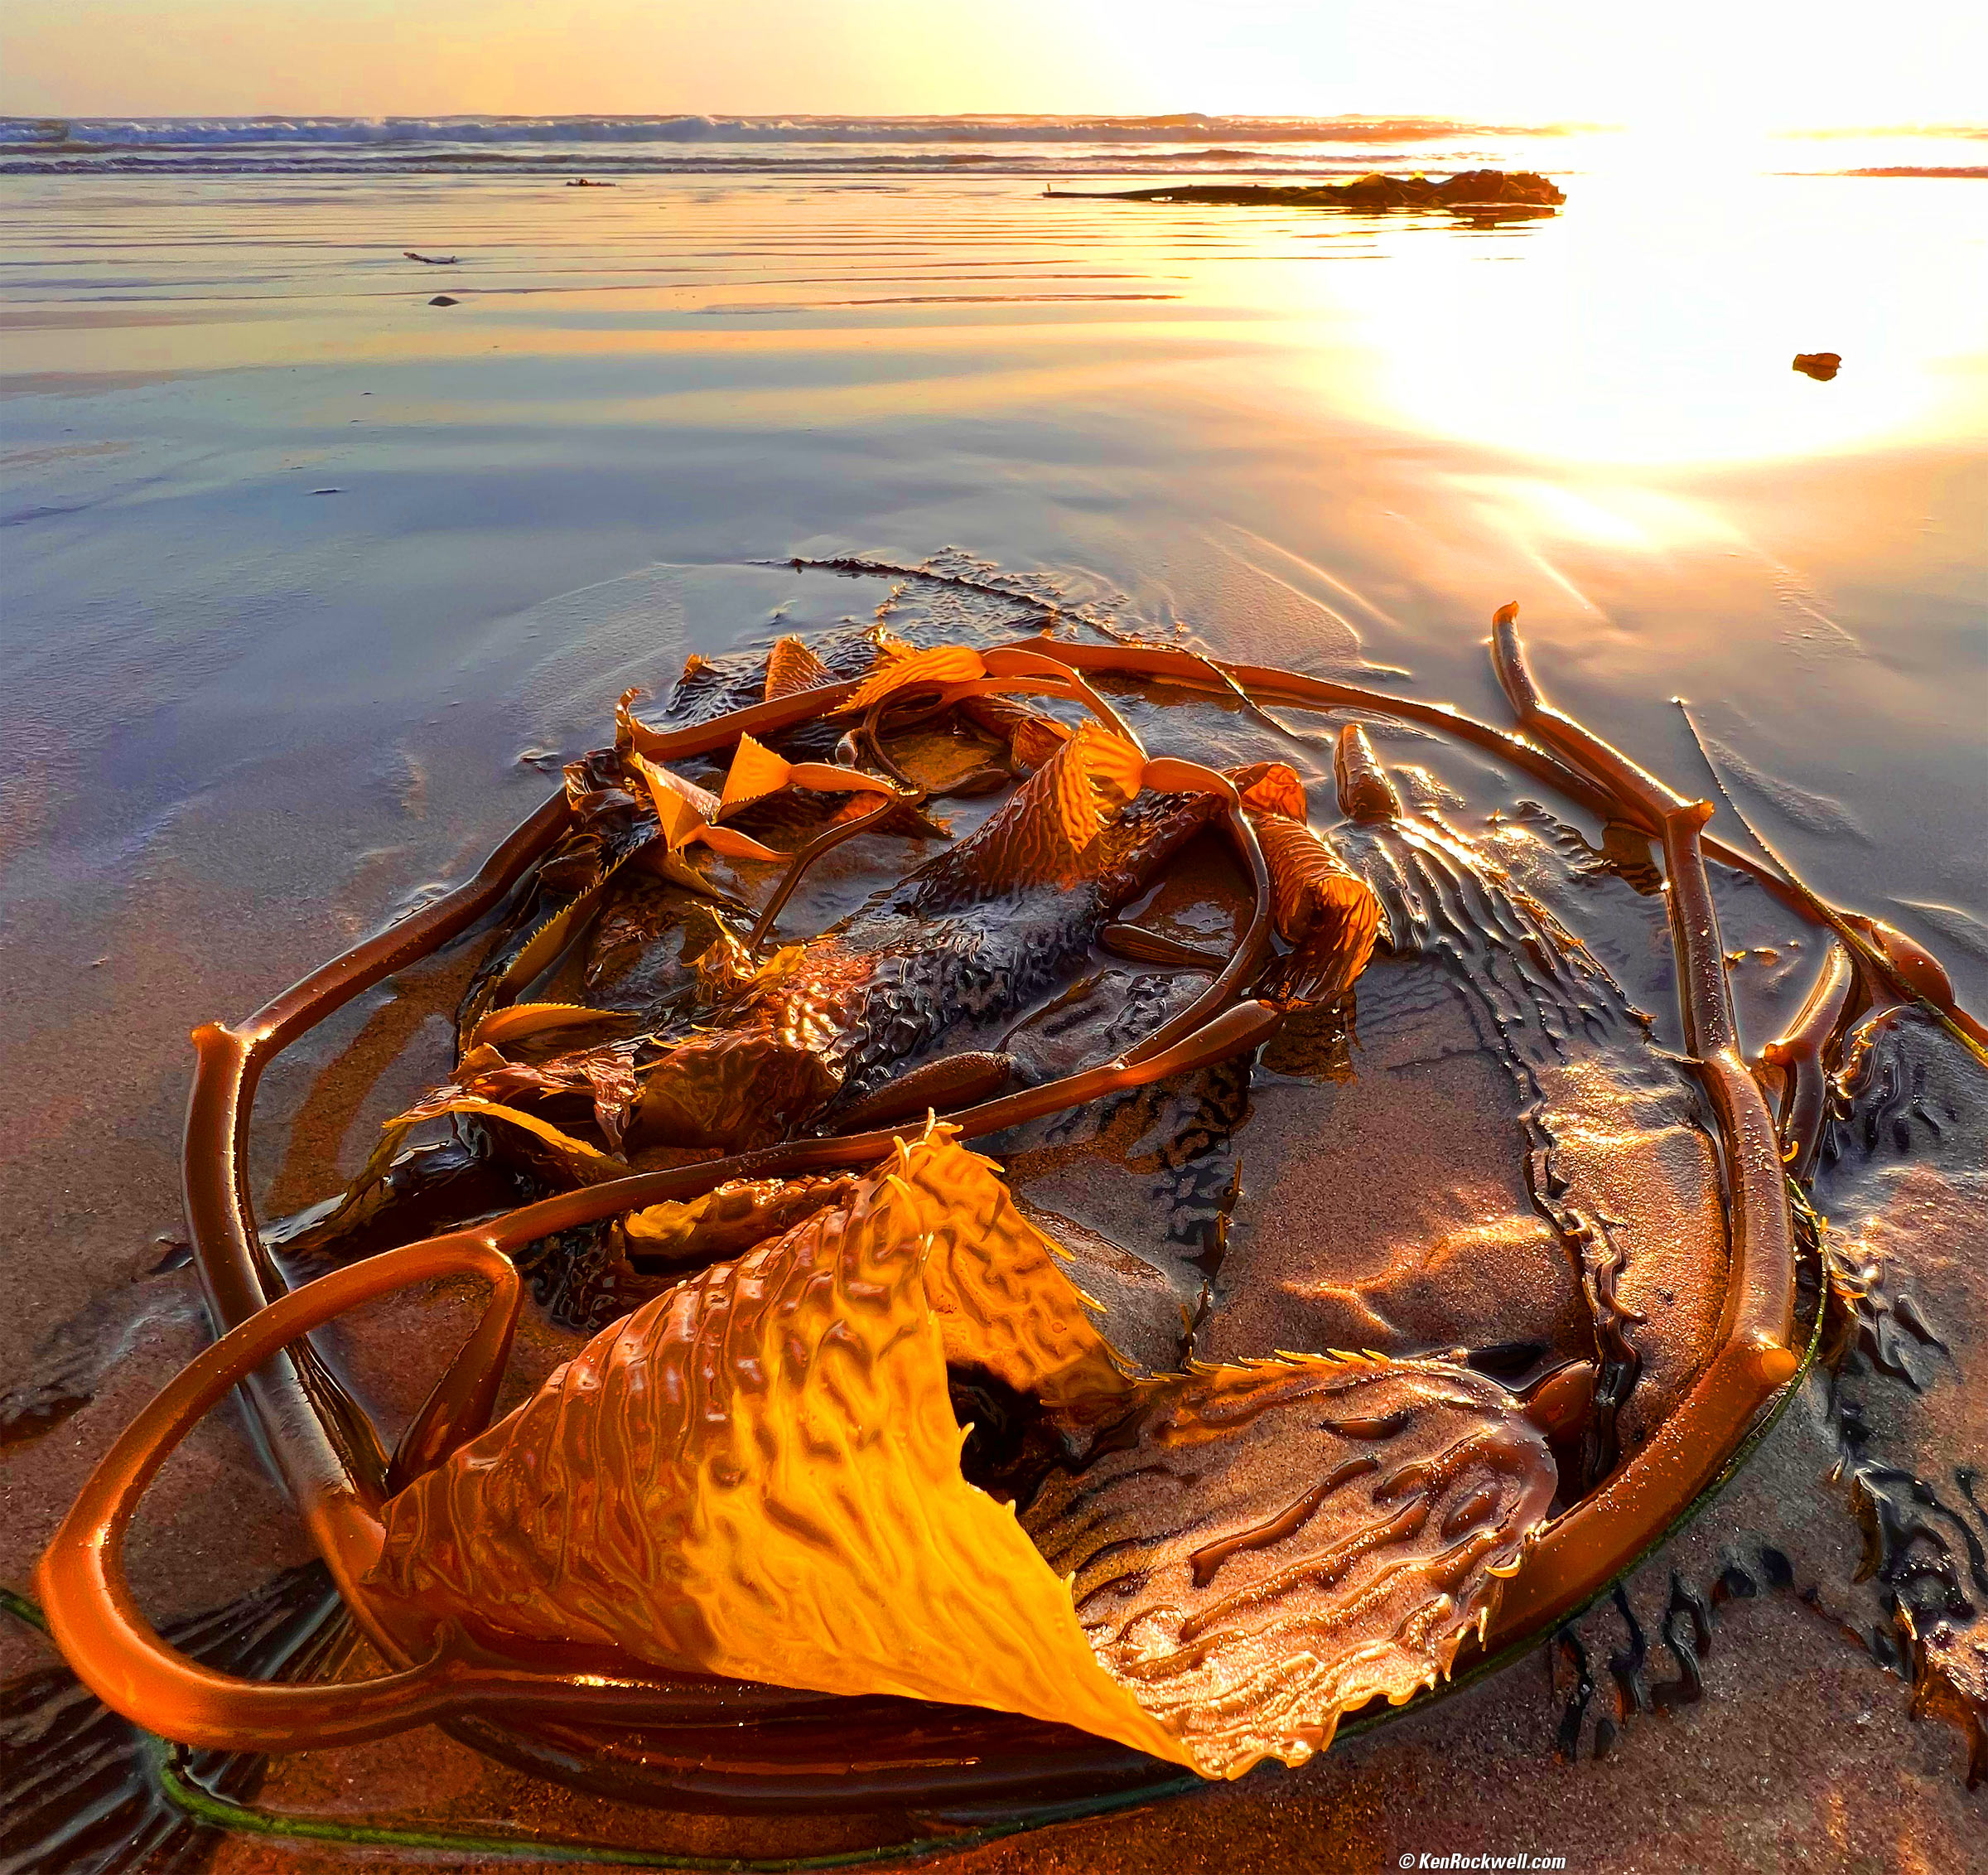 Backlit Kelp in the Waves at Sunset, Oceano Dunes, California